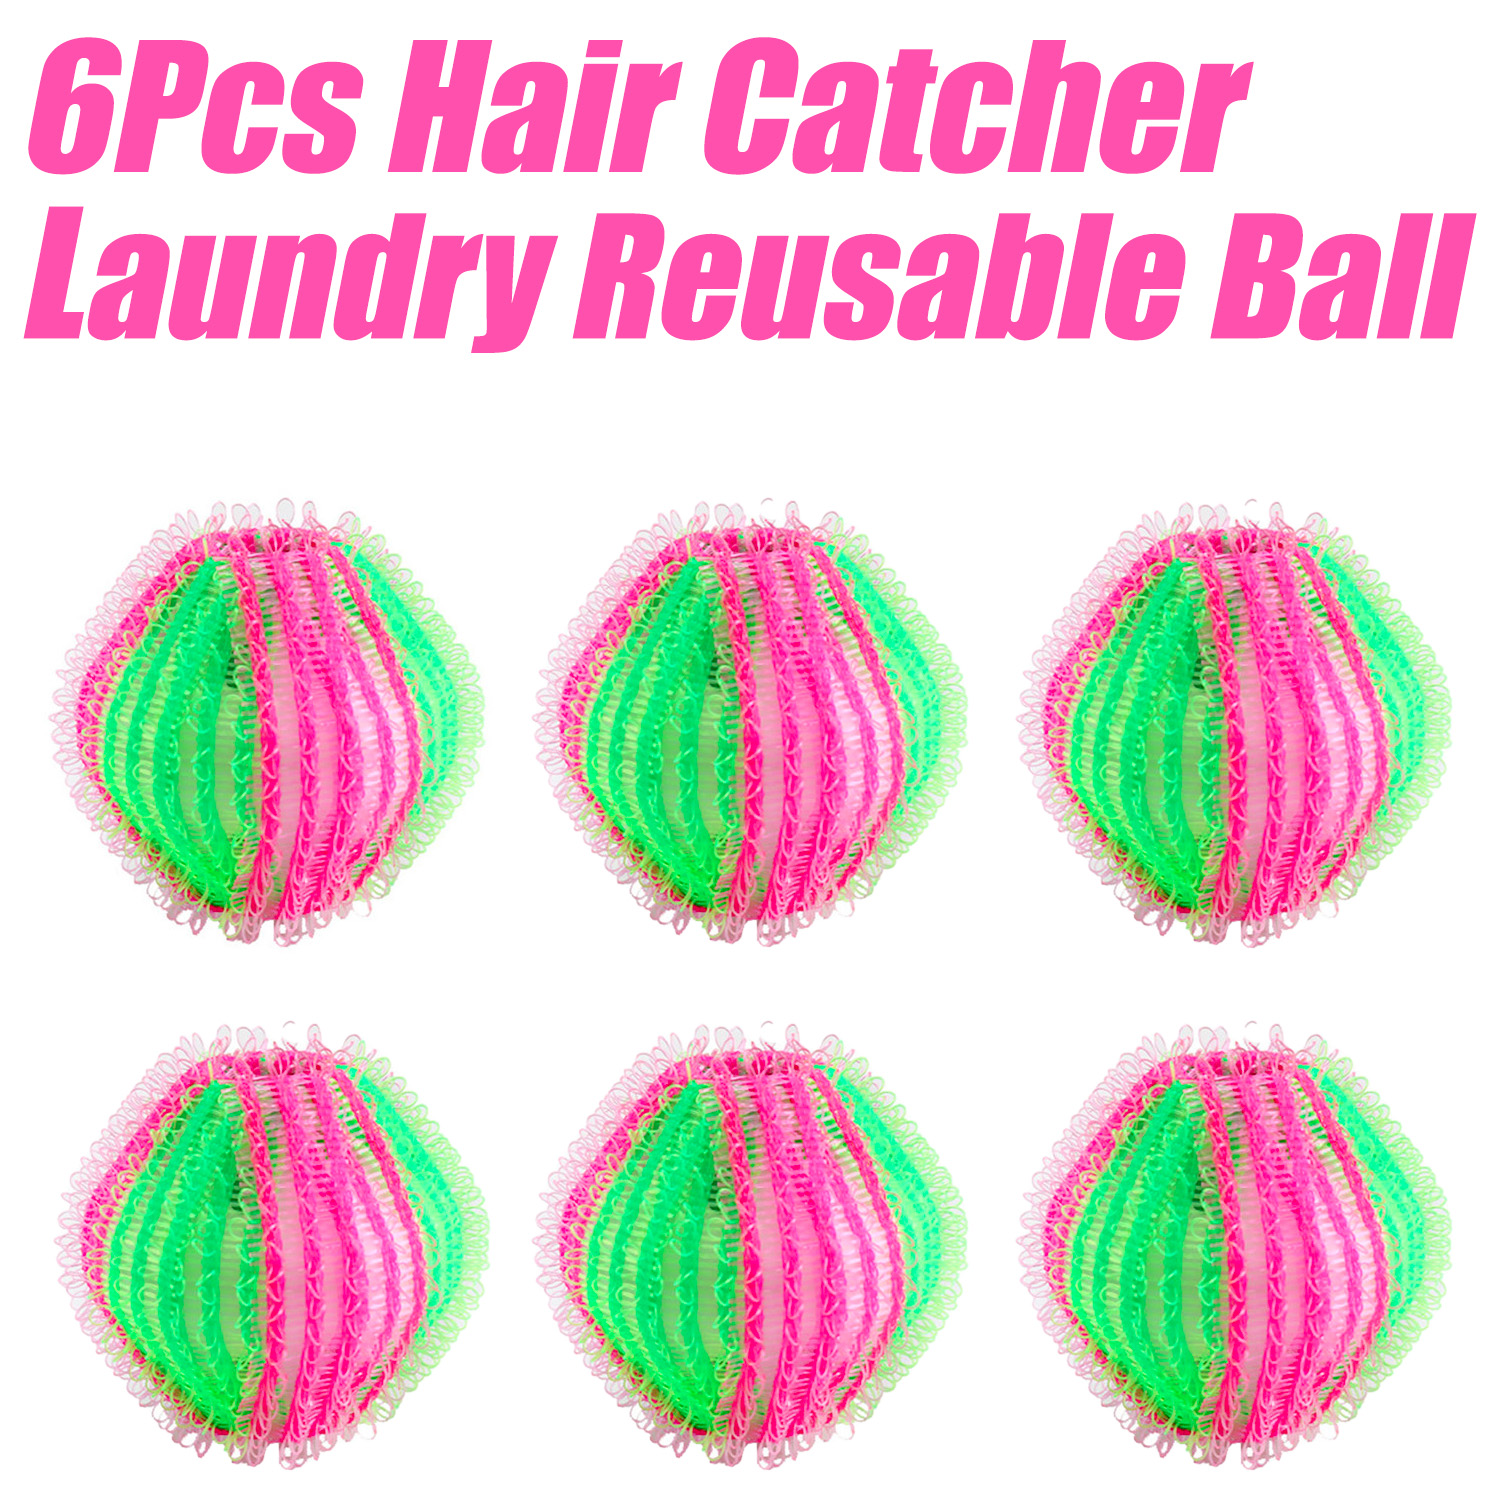 6Pcs Nylon Laundry Balls Anti-winding Washing Machine Hair Remover Laundry Ball Fluff Cleaning Lint Fuzz Grab Laundry Balls